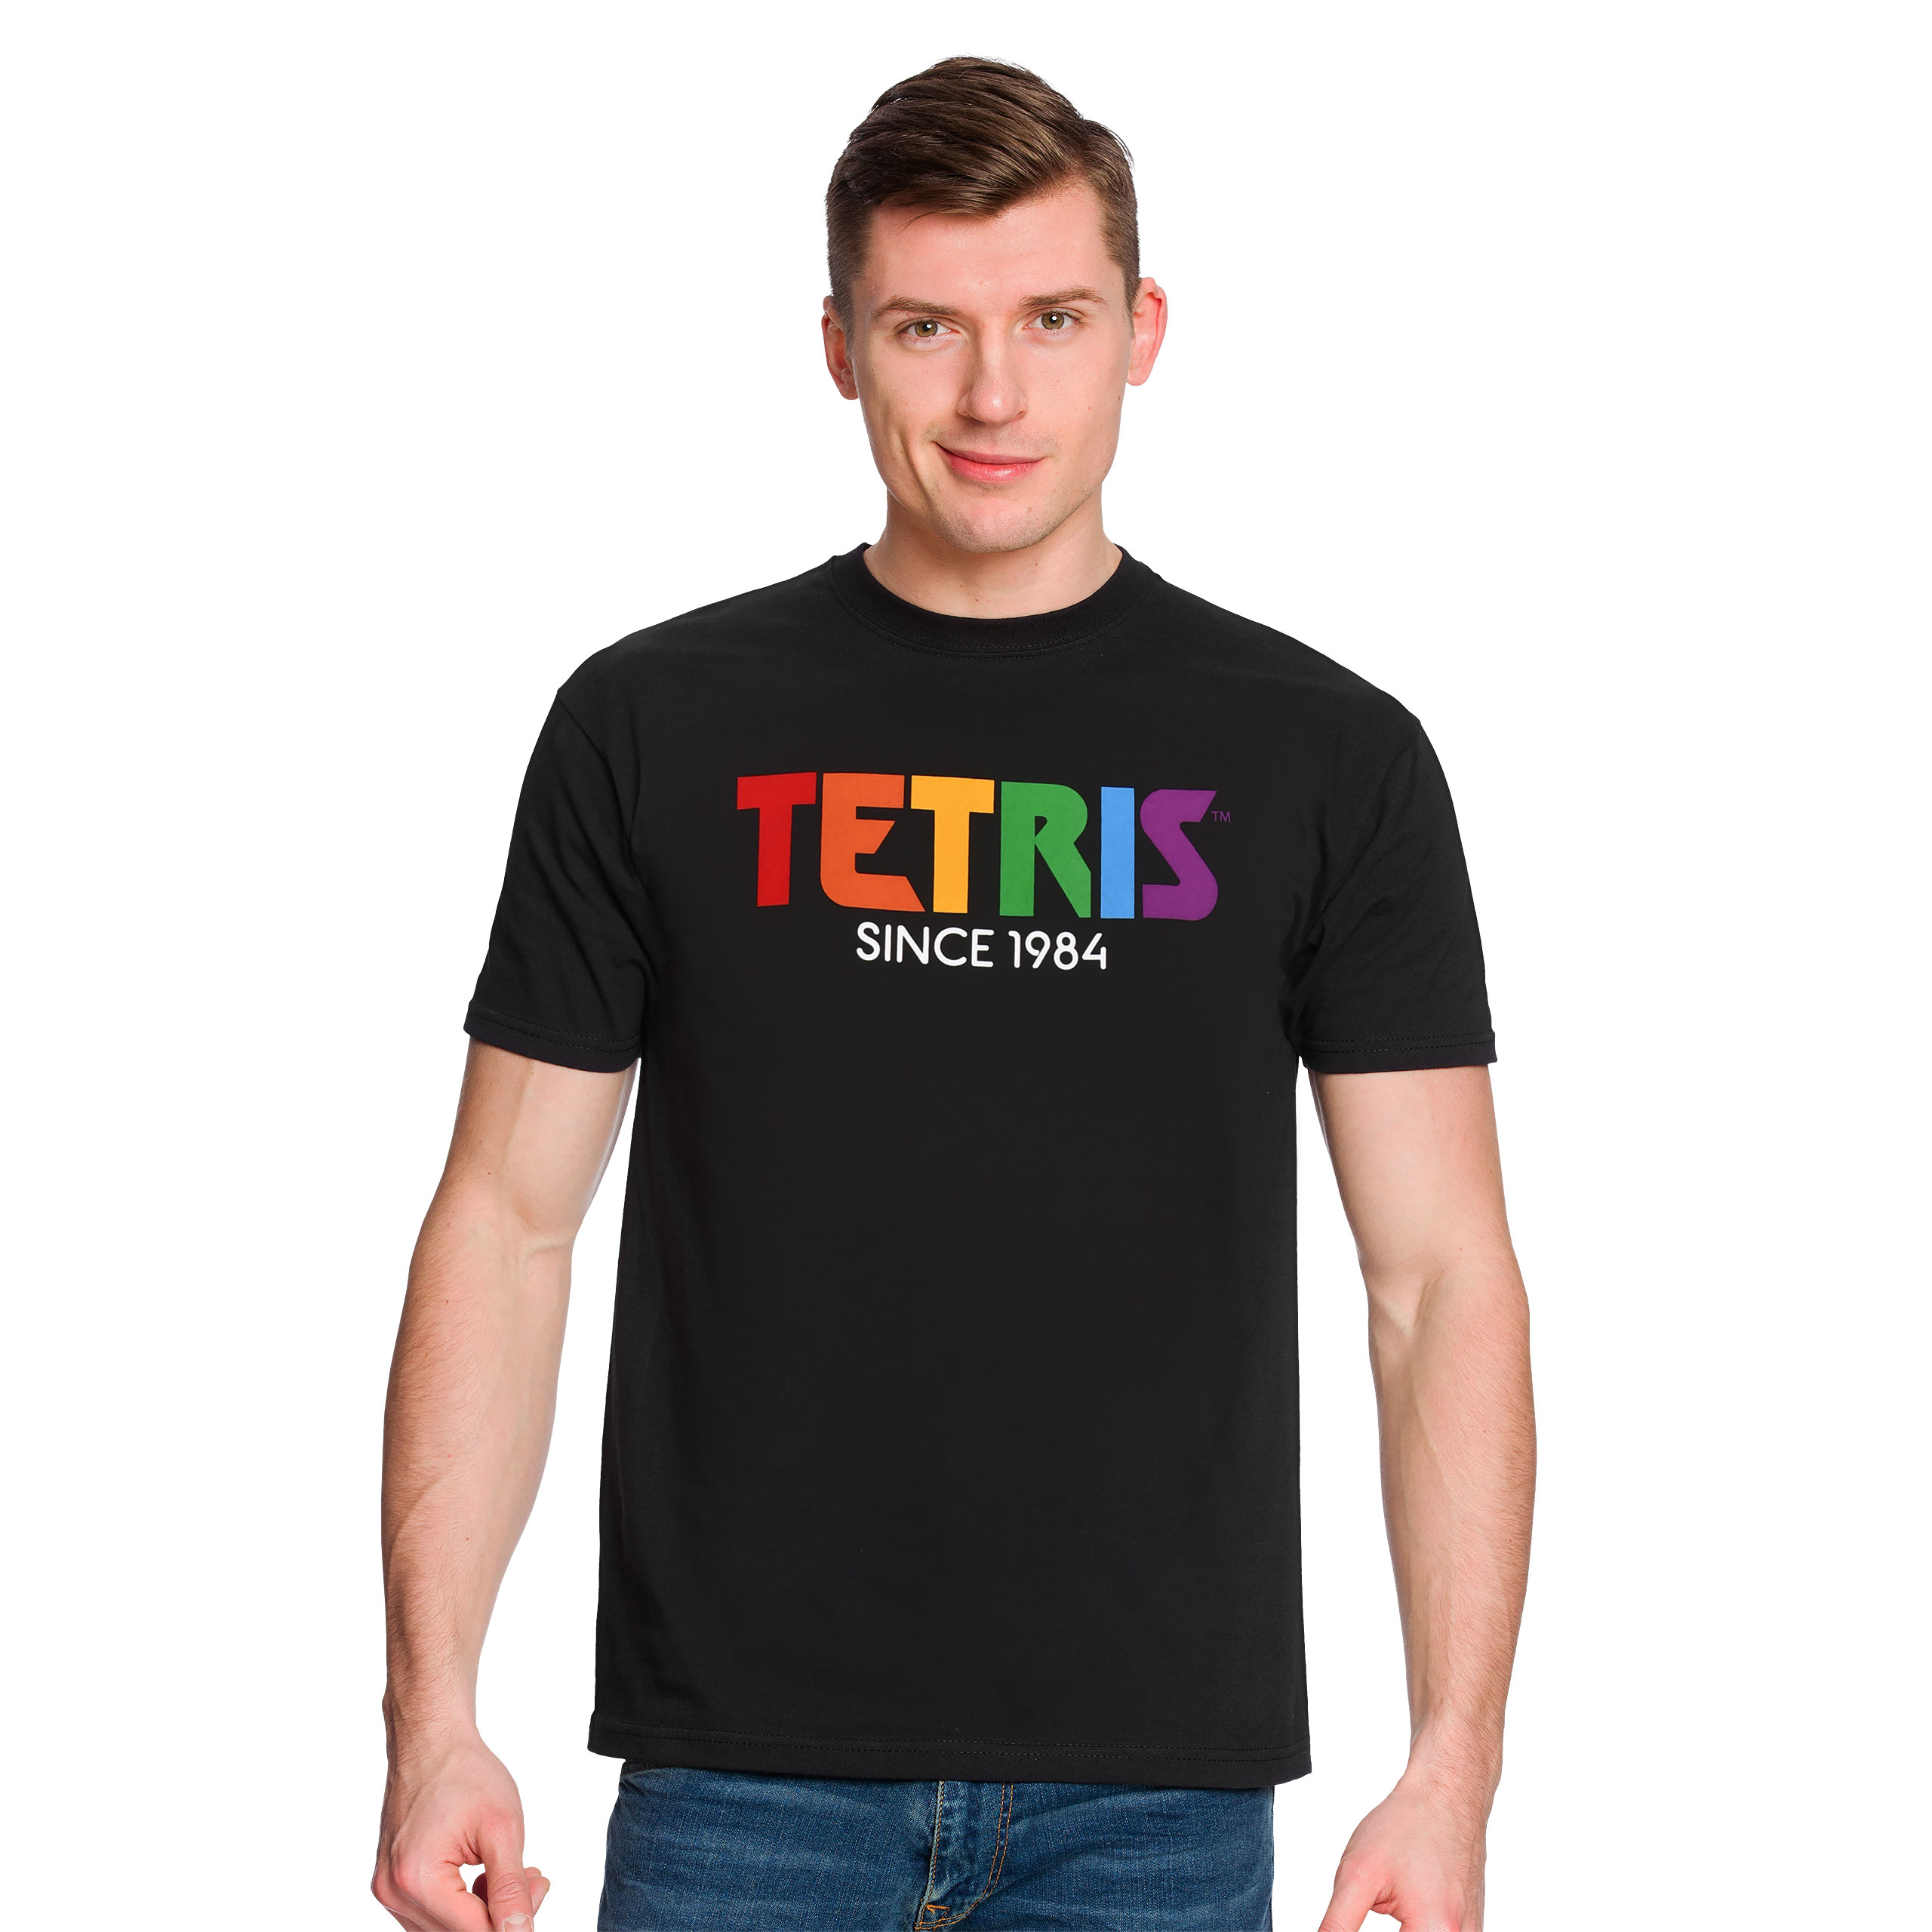 Tetris - Since 1984 Black T-Shirt